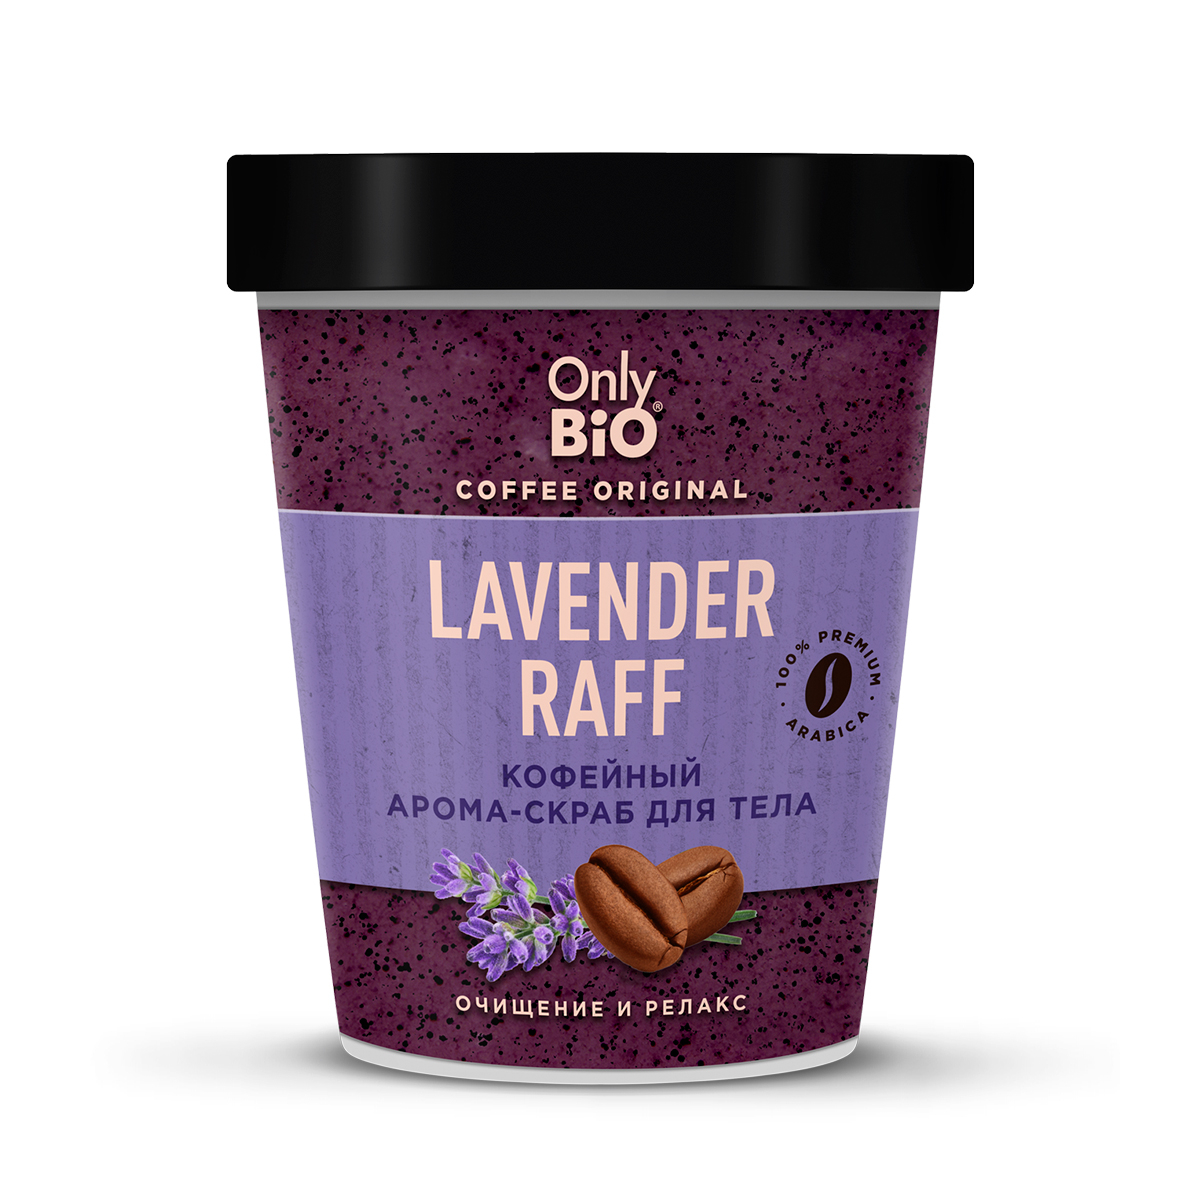 Скраб-арома для тела Only Bio Coffee Original Lavender Raff кофейный, 230 мл voara скраб арома voara для душа пижма 240 г